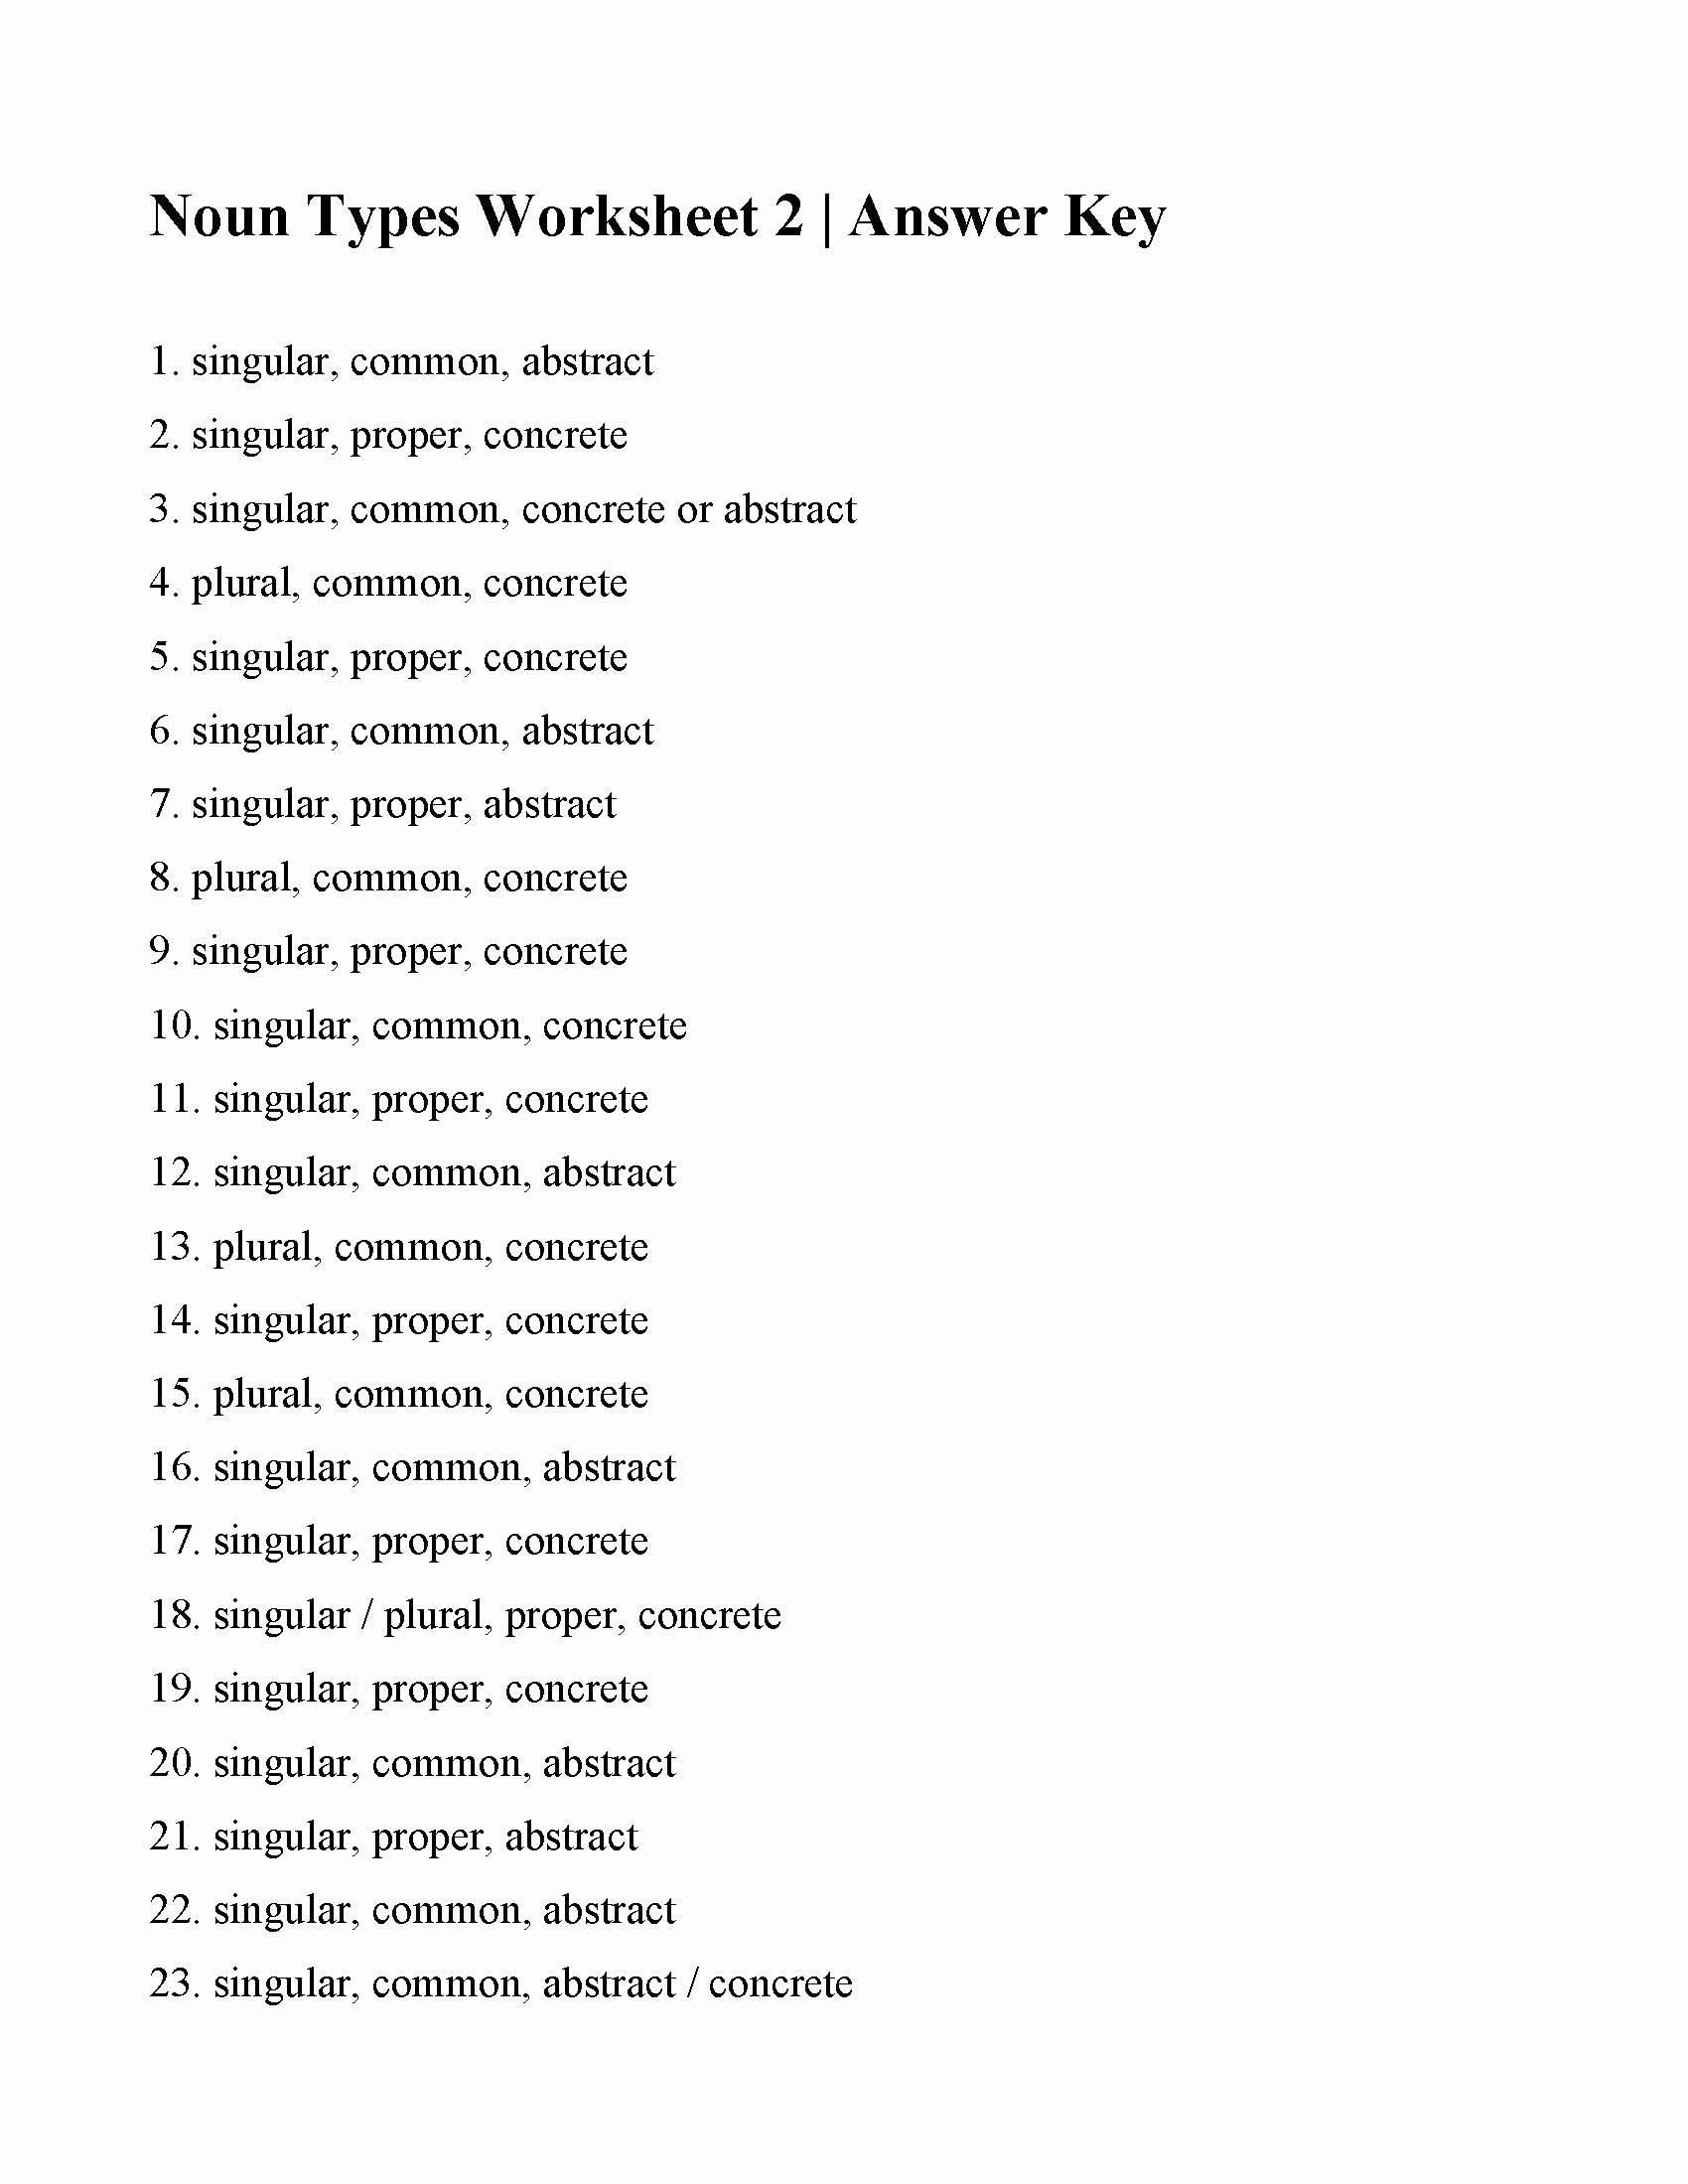 Types Of Nouns Worksheet New Noun Types Worksheet 2